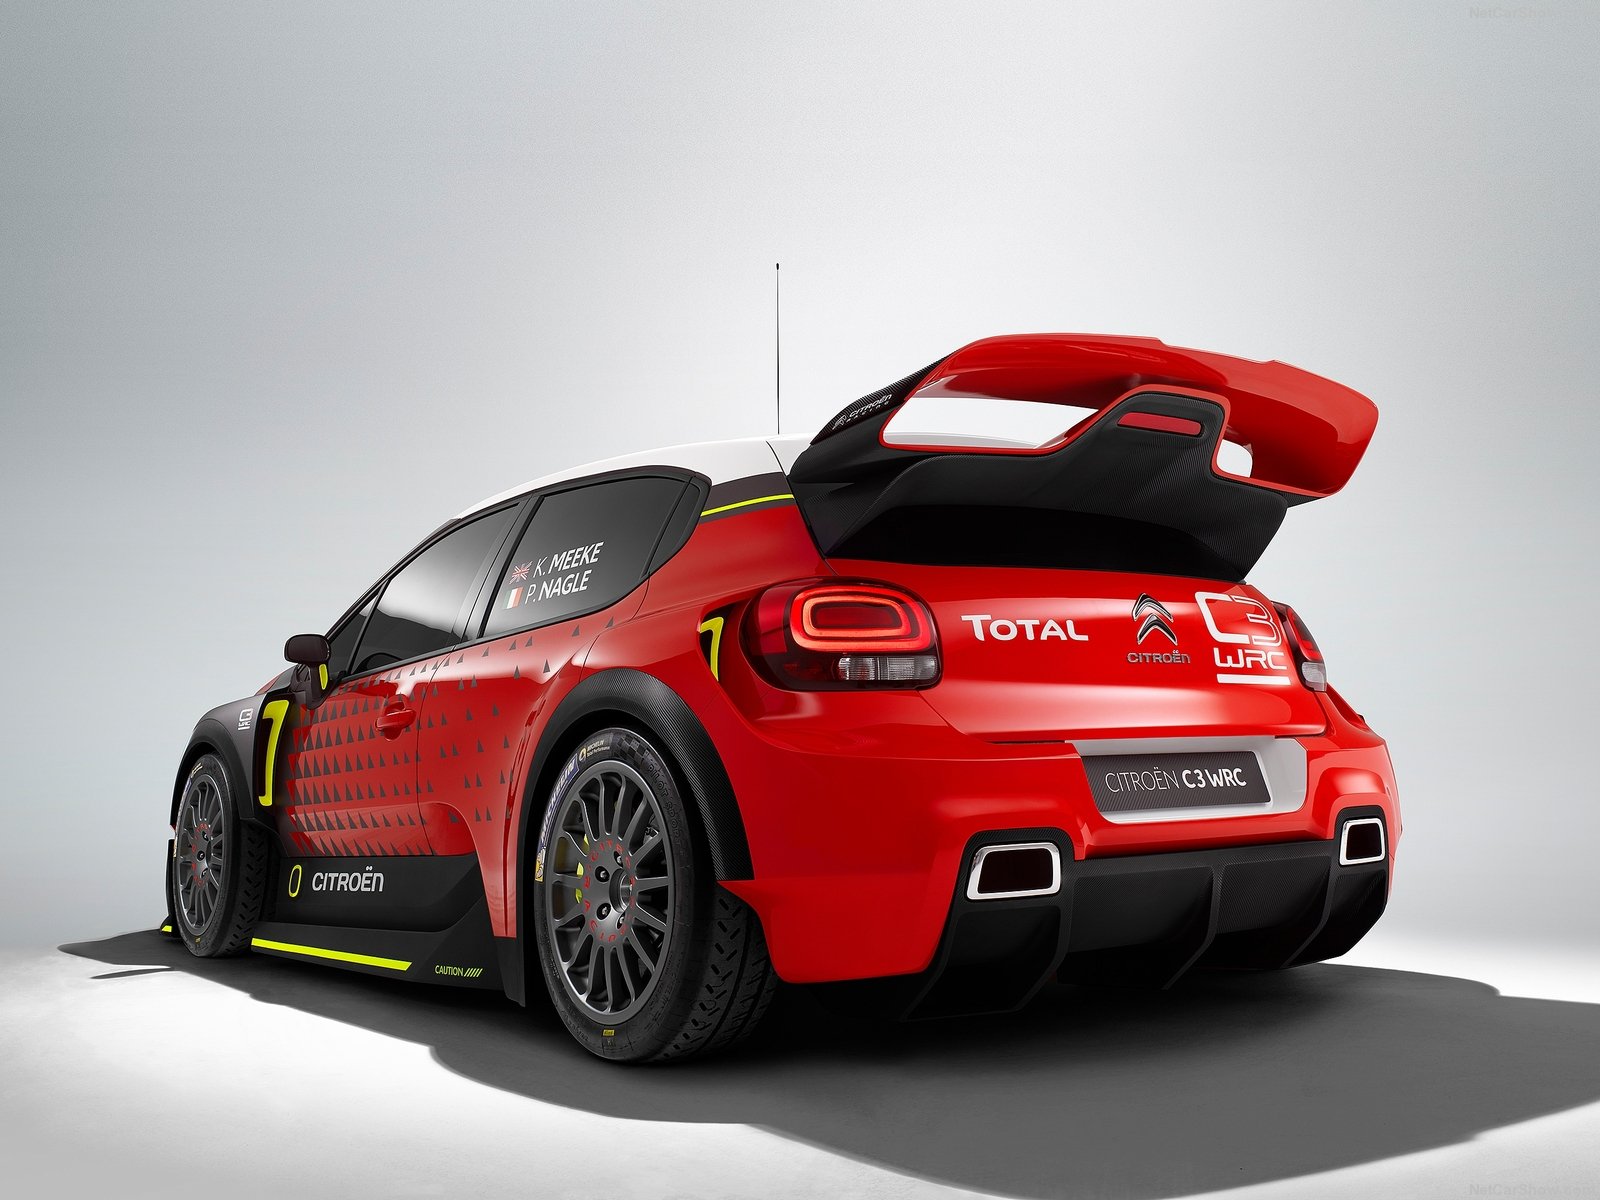 NFS - Need for Speed - Citroen C3 WRC Concept